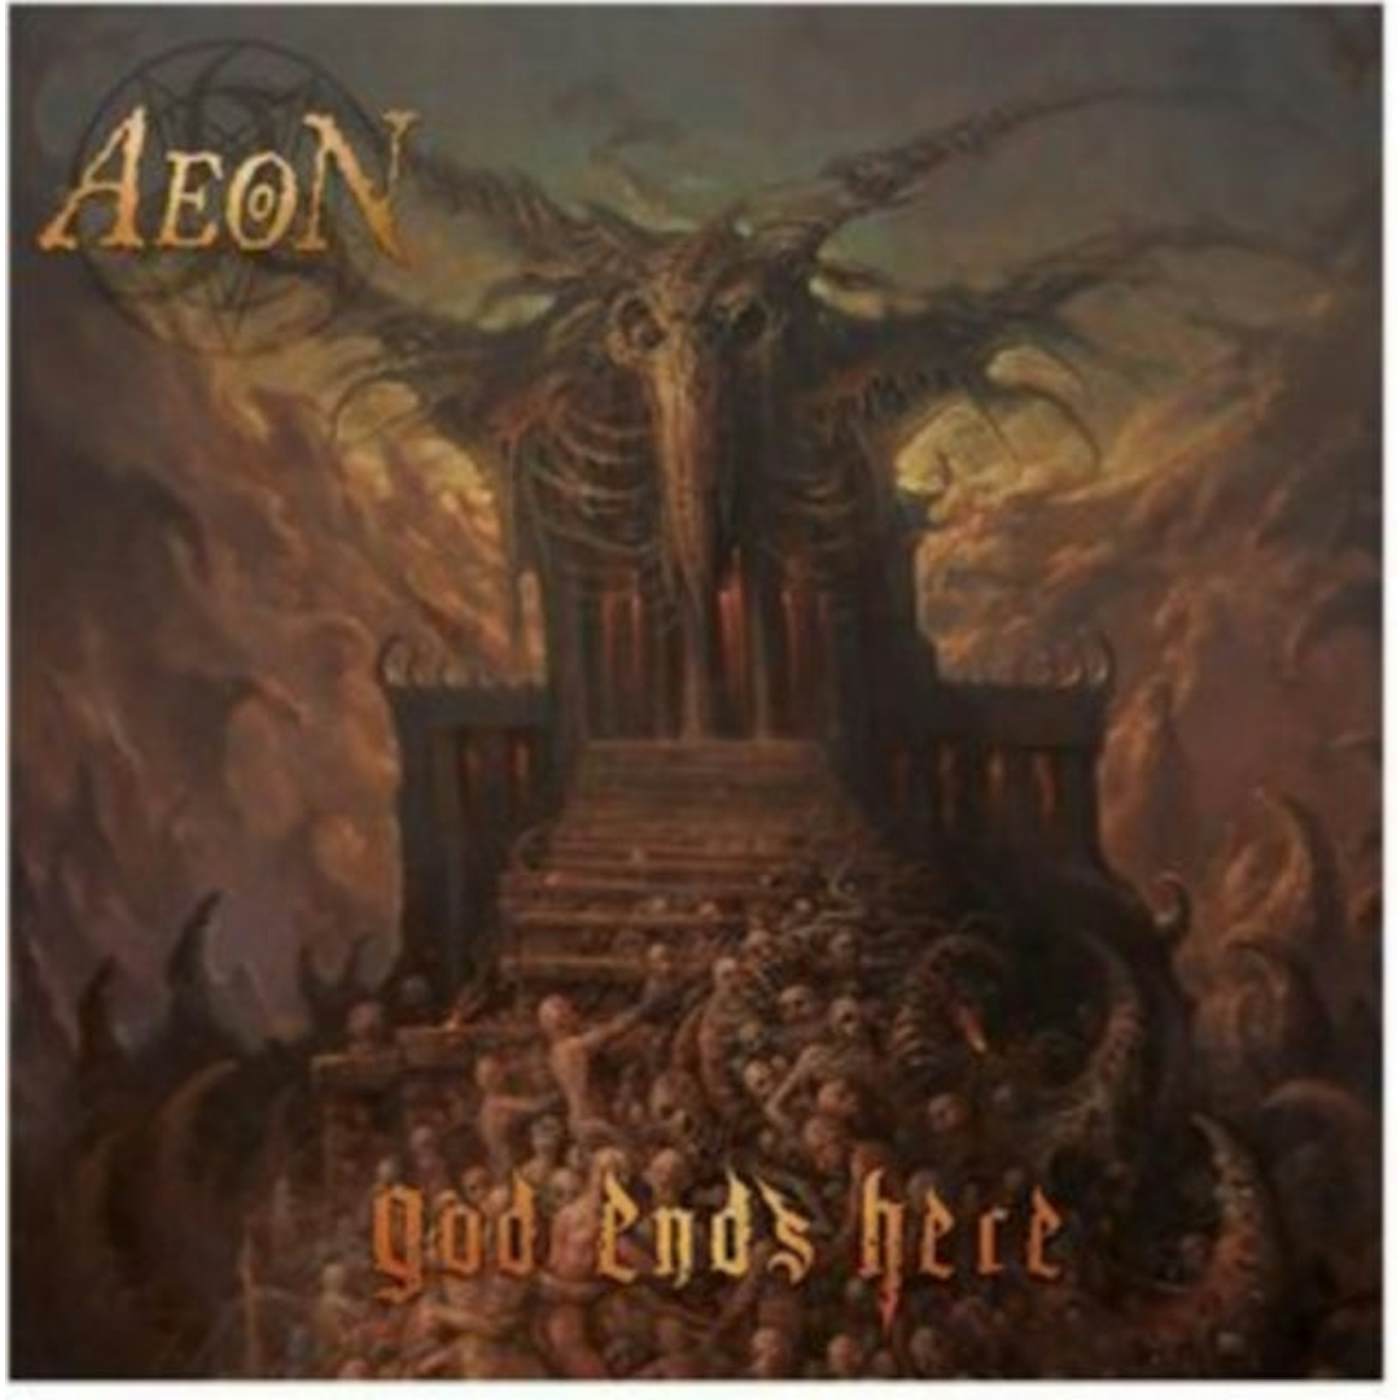 Aeon LP - God Ends Here (Vinyl)